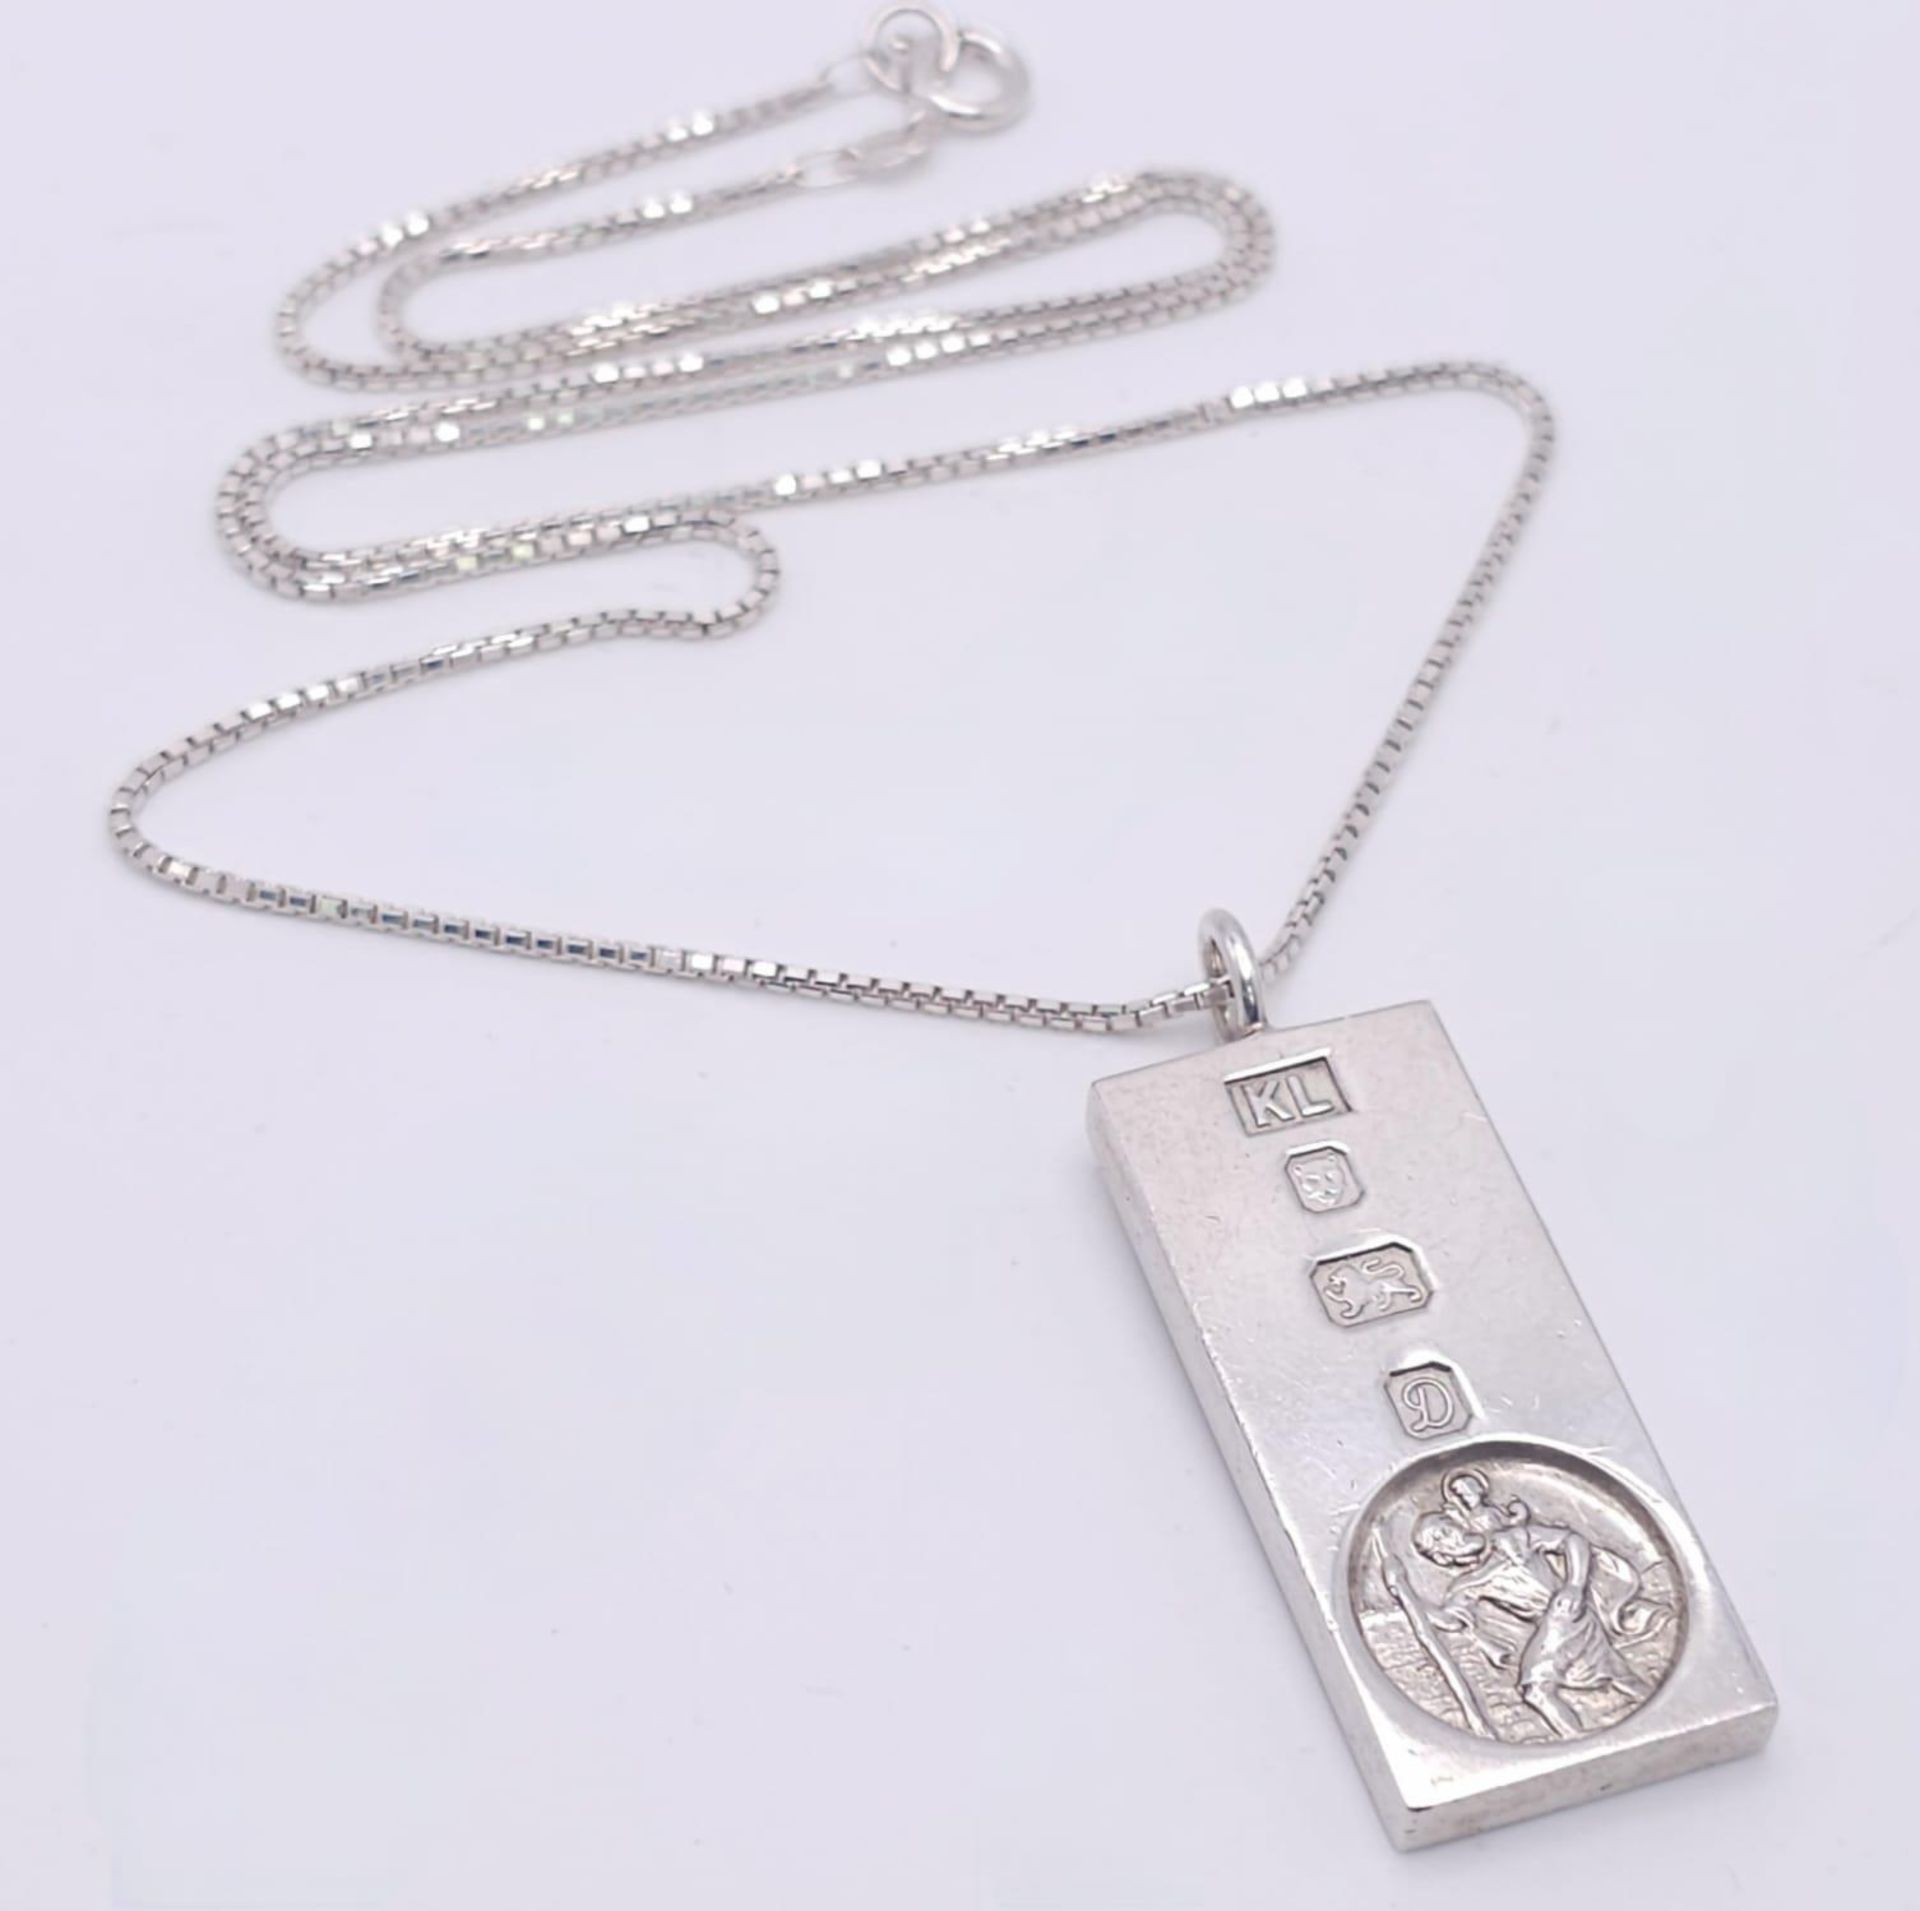 A Sterling Silver St. Christopher Ingot Pendant on a Silver Necklace. 5cm - pendant. 58cm necklace